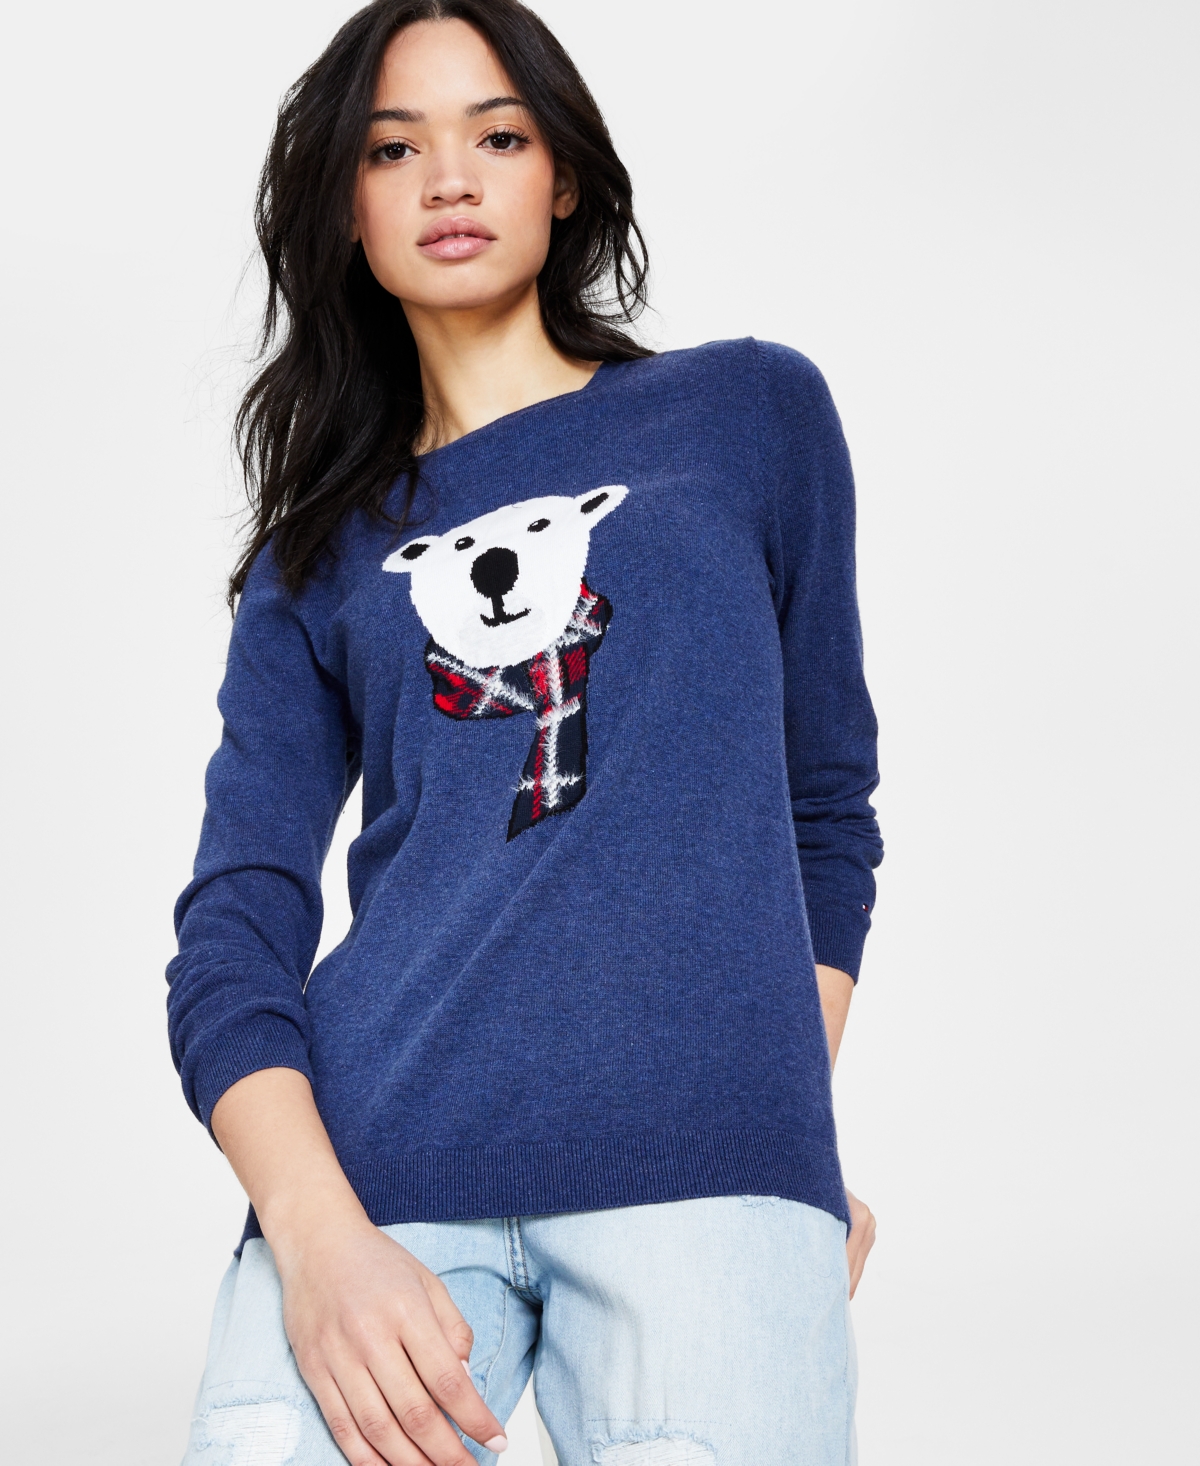 Tommy Hilfiger Women's Cotton Polar Bear Sweater